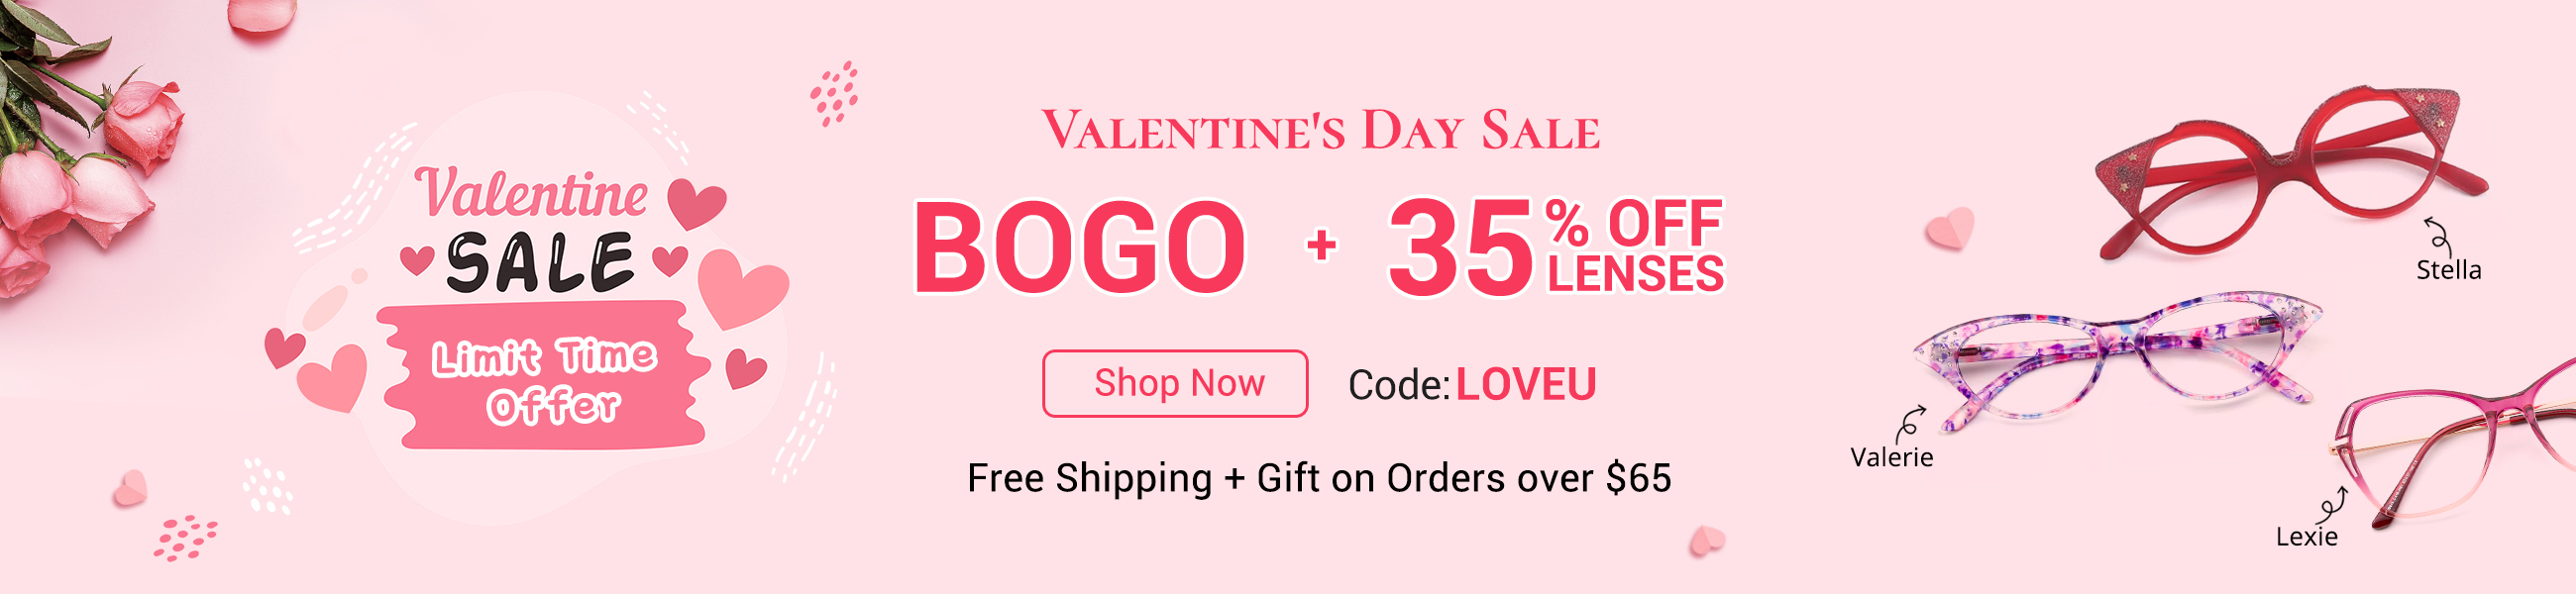 Valentine's Day Special - BOGO + 30% OFF